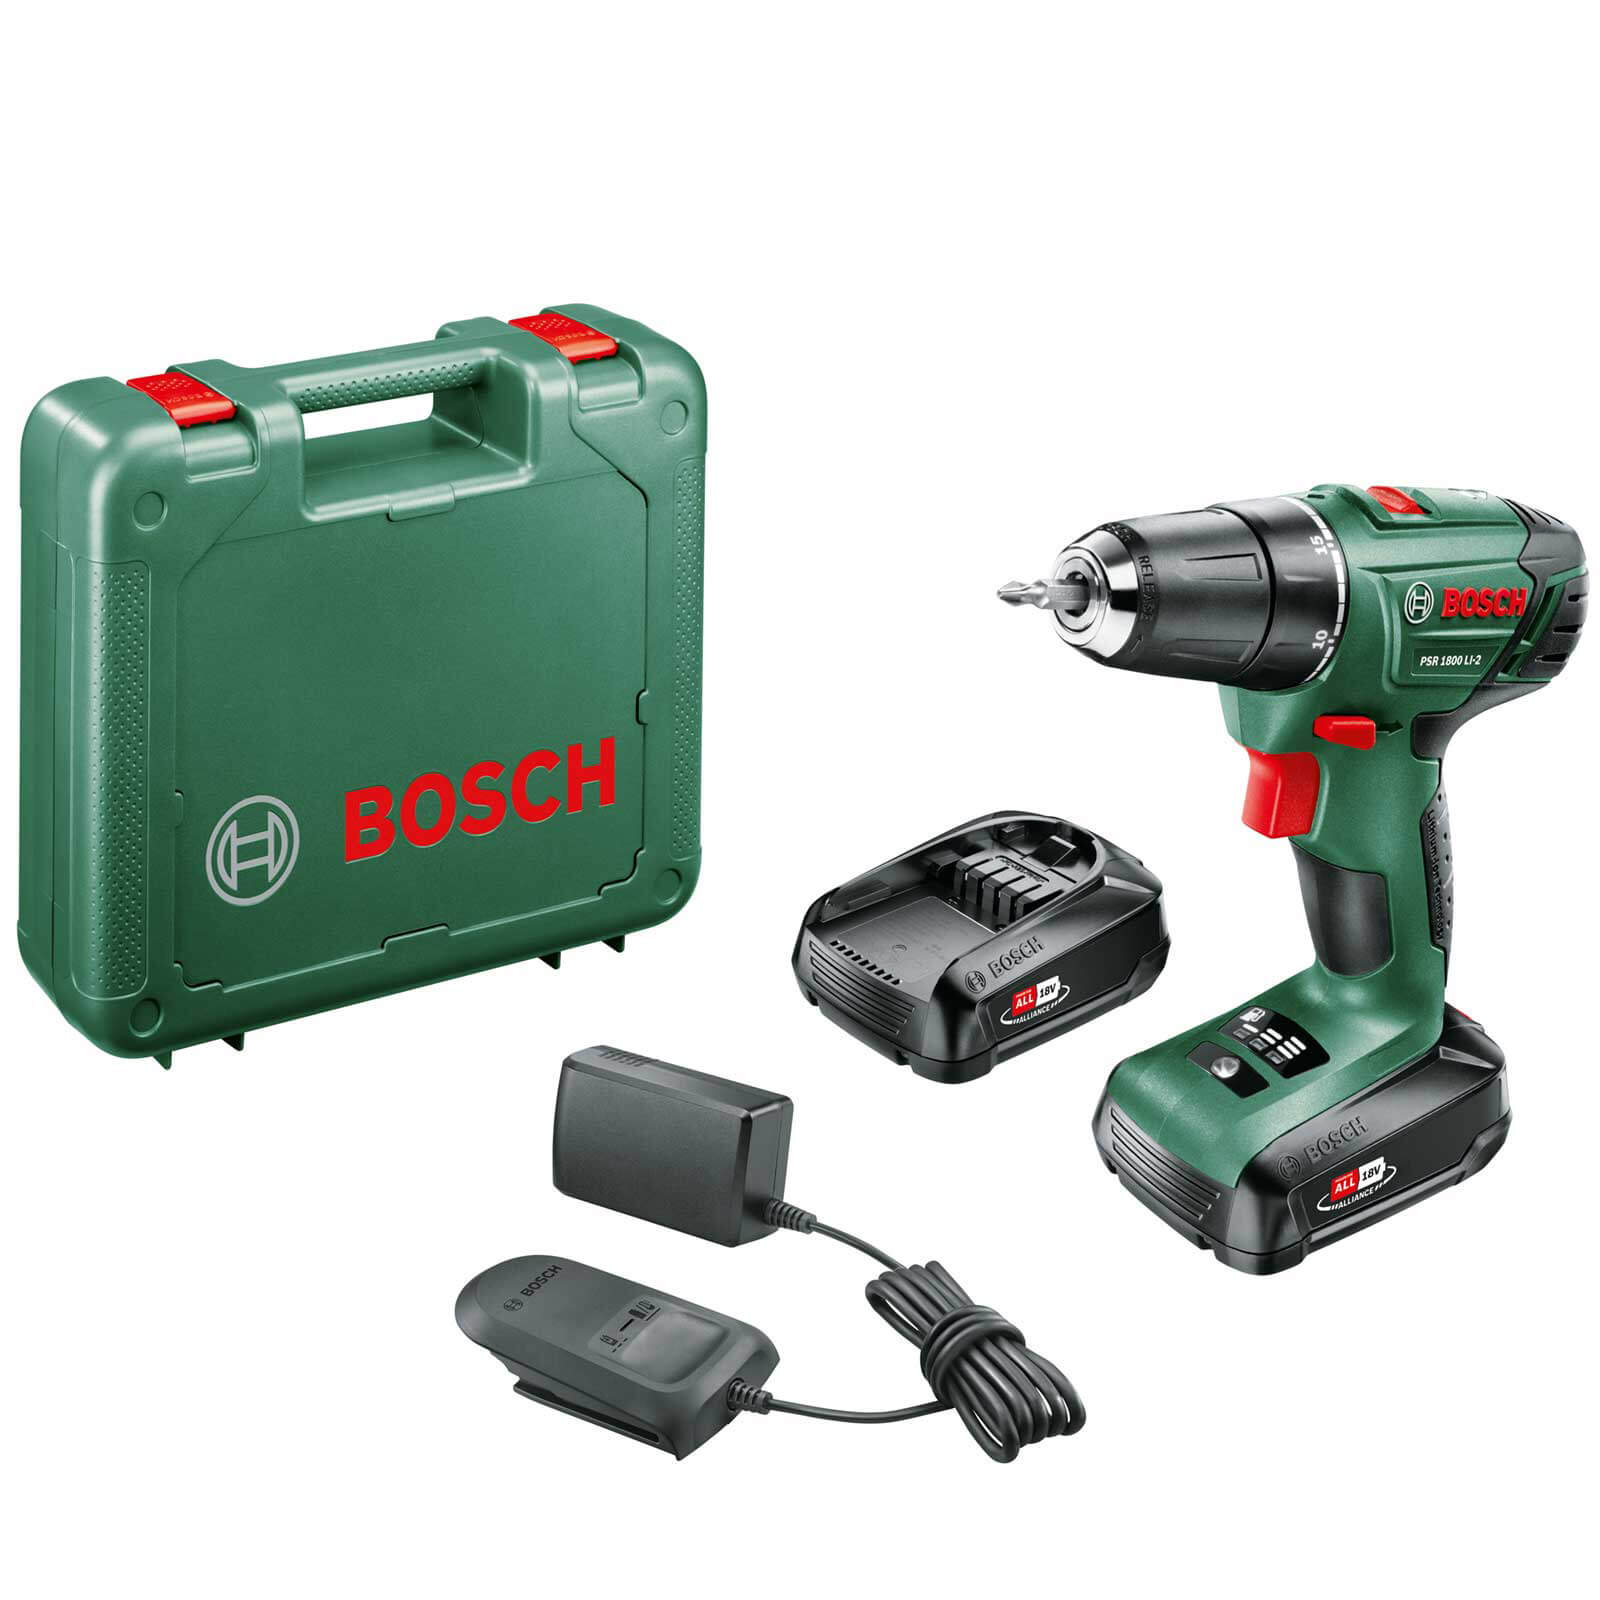 Image of Bosch PSR 1800 LI-2 18v Cordless Drill Driver 2 x 2.5ah Li-ion Charger Case